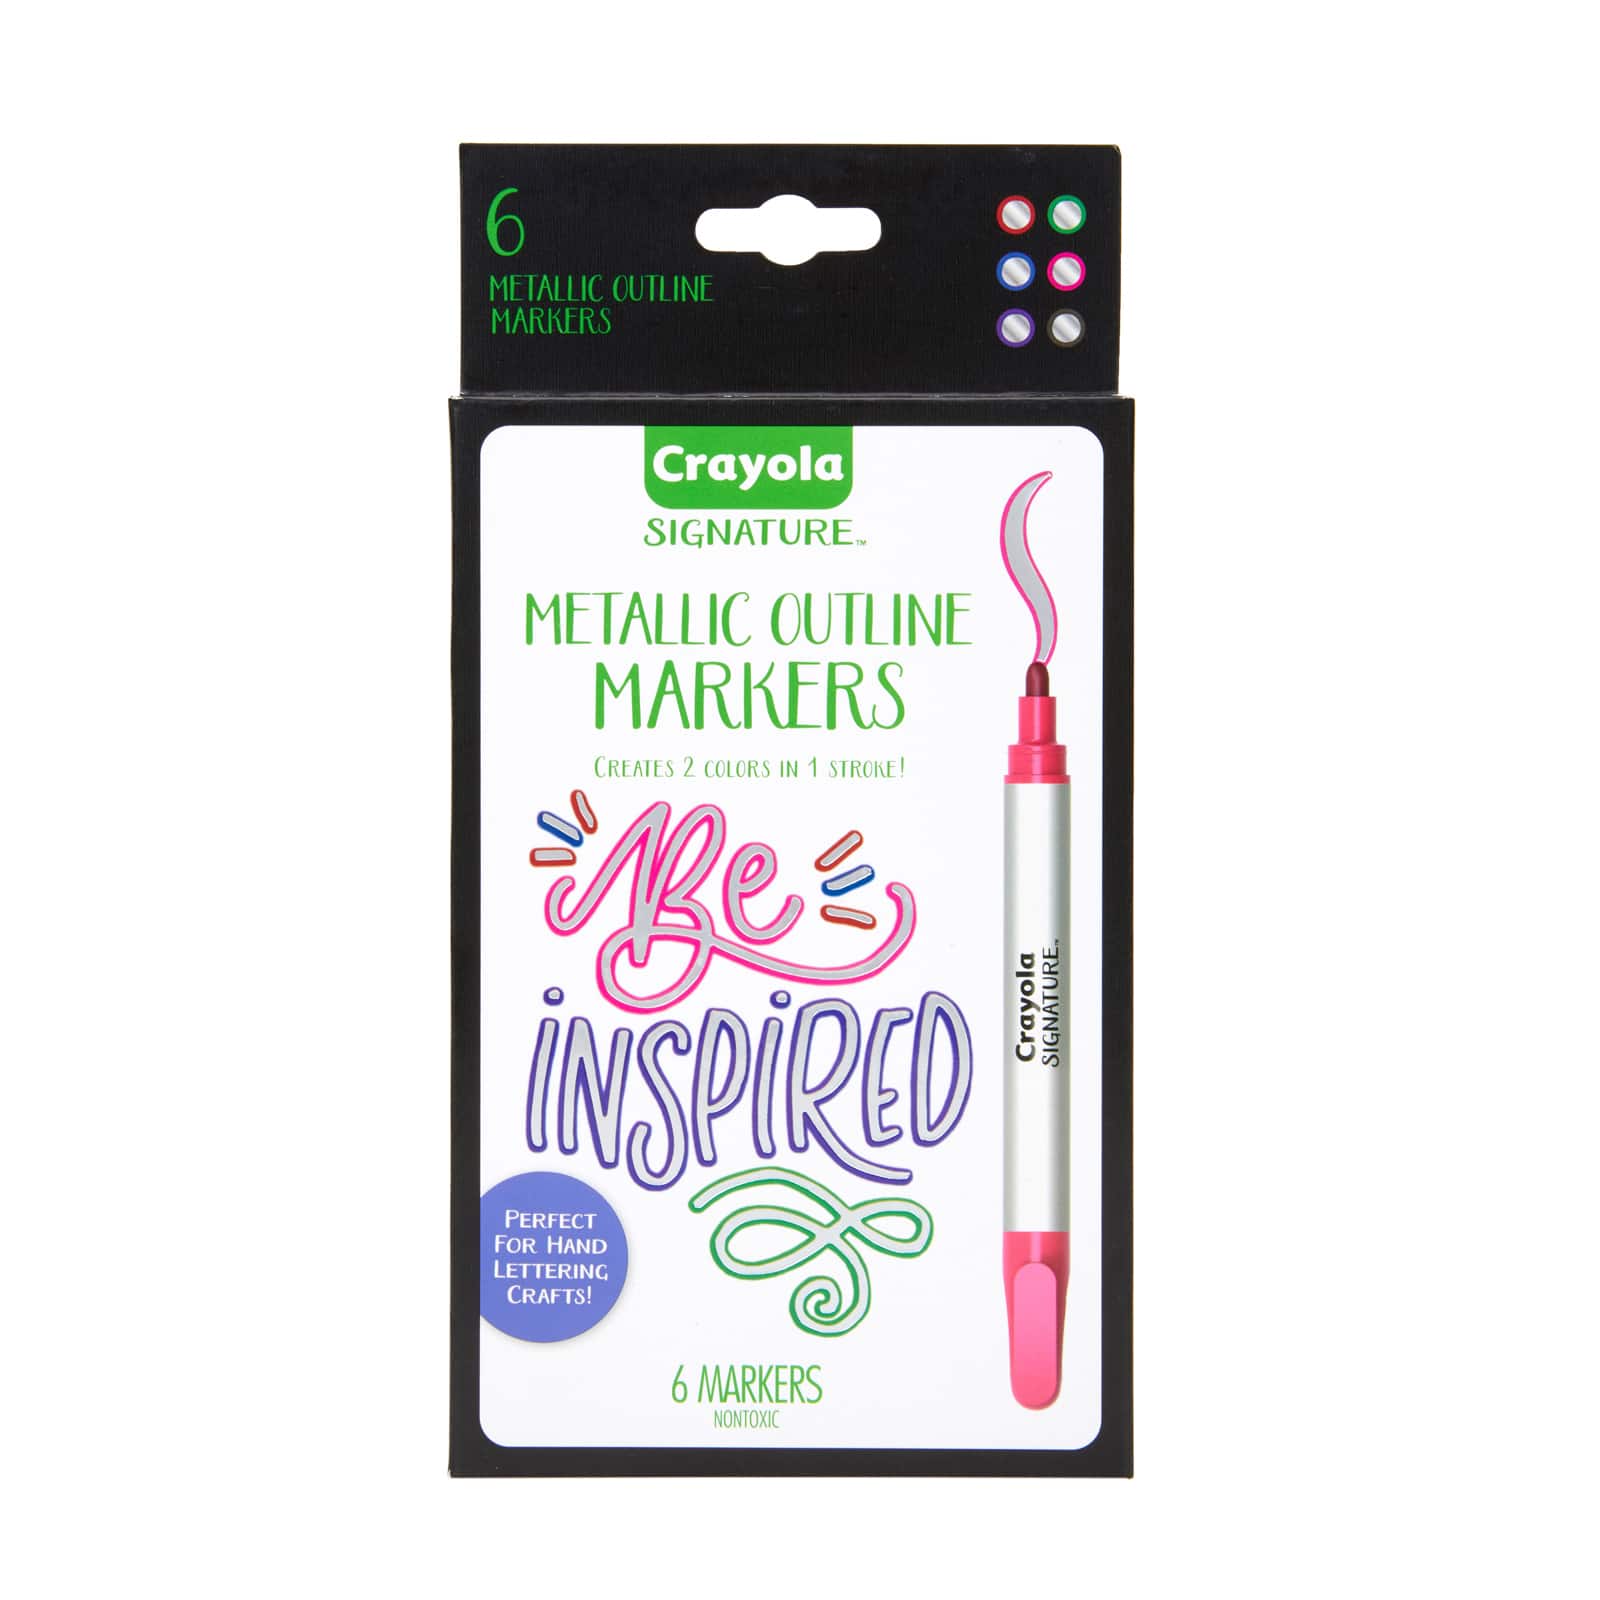 Doodle Dazzles Shimmer Marker Set 20 Piece Assorted Colors Writing Utensils